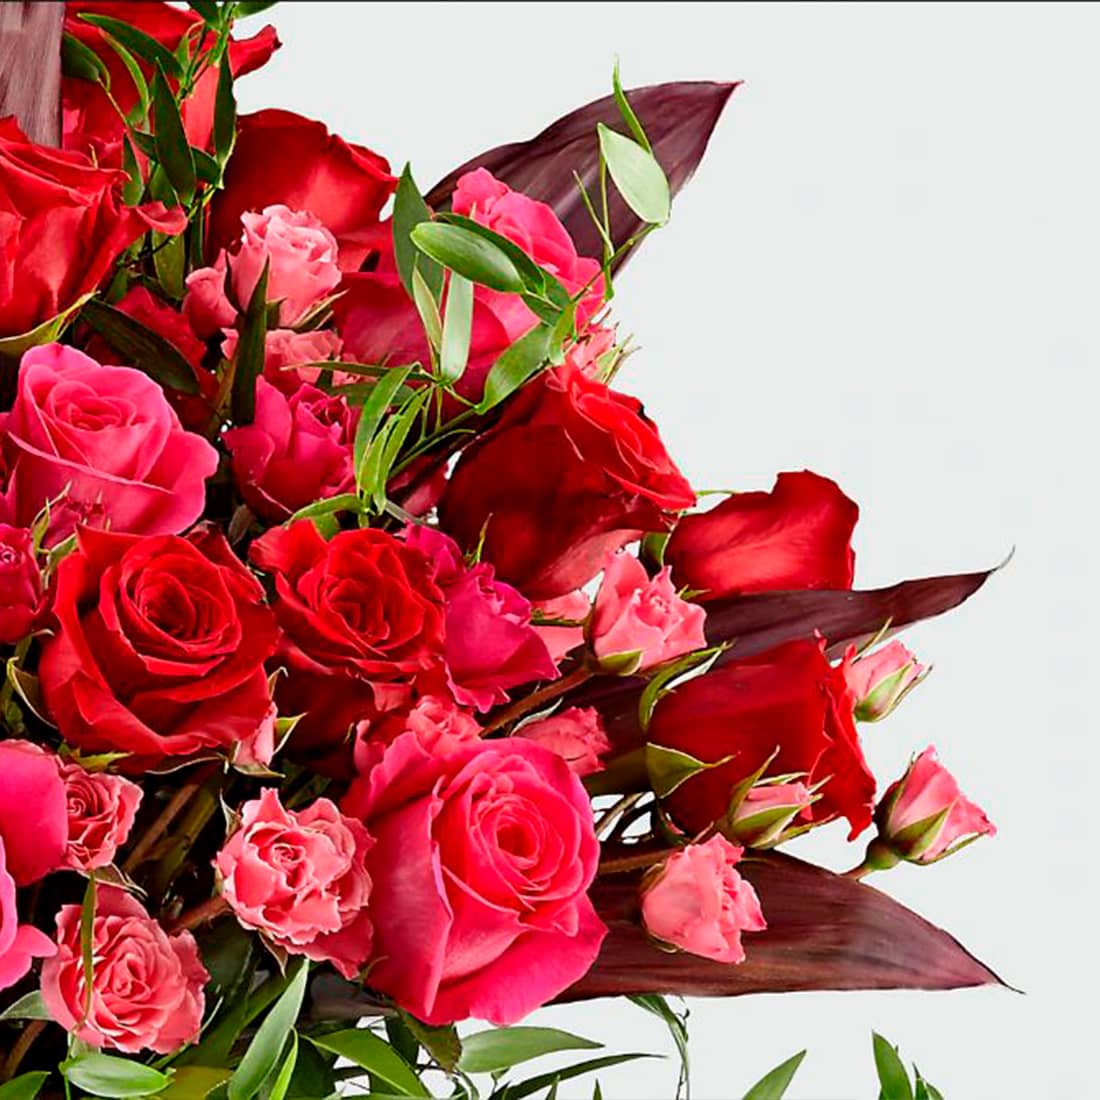 Fresh Flowers Orlando Regala Flores y Sonrrisas - Colección Love and Romance Flowers